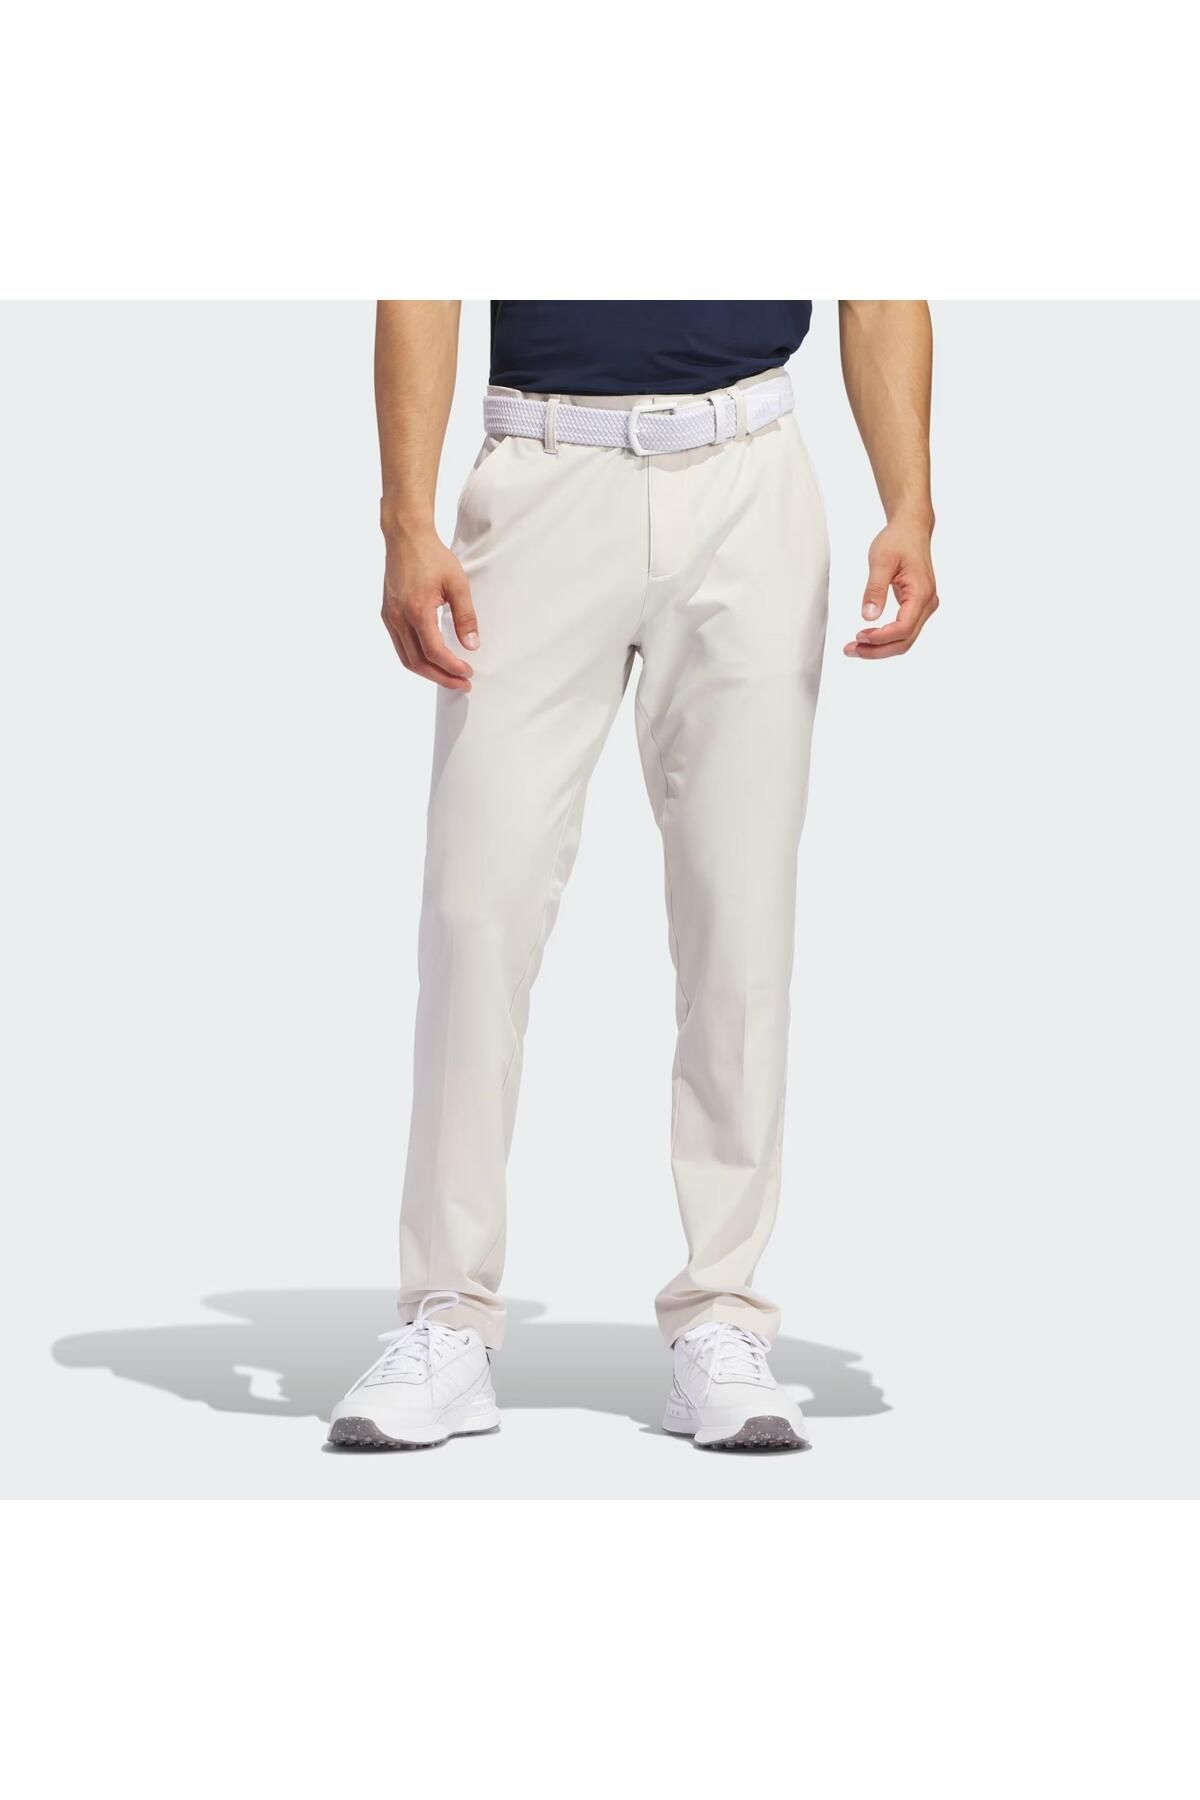 adidas Ultimate365 Tapered Golf Erkek Pantolon